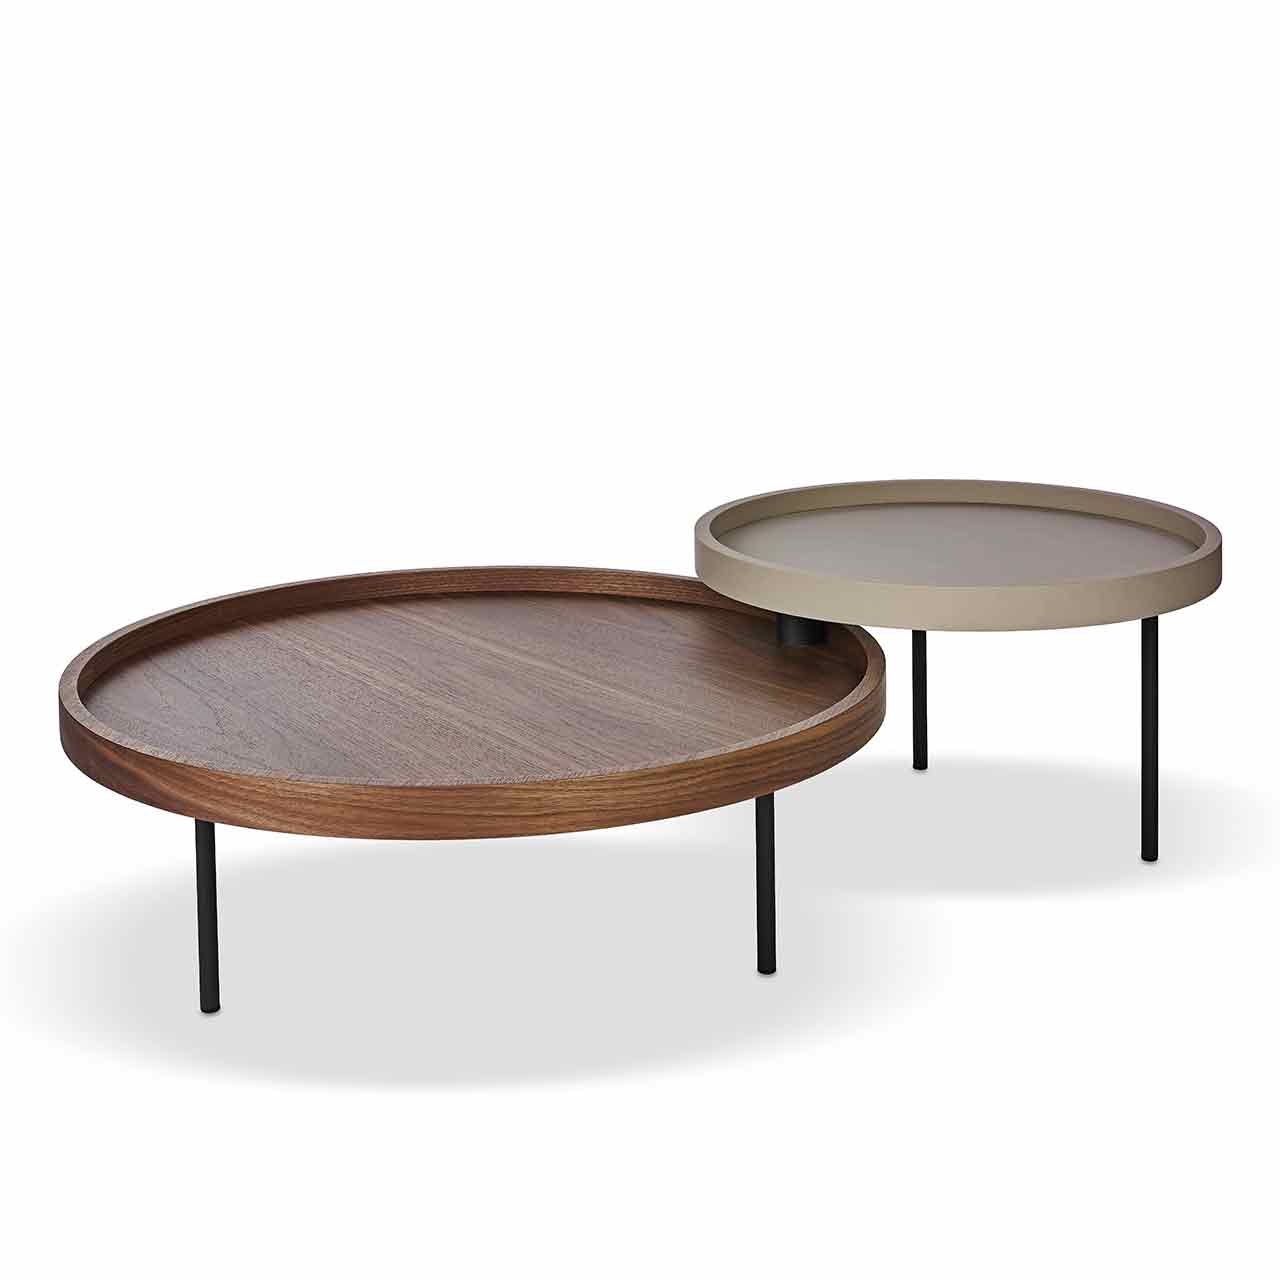 Ronald Schmitt – Couchtisch Luna H 630 | linker Tisch: Tischplatte Nussbaum, rechter Tisch: Tischplatte Standardfarbe Bronze, Metallgestell schwarz